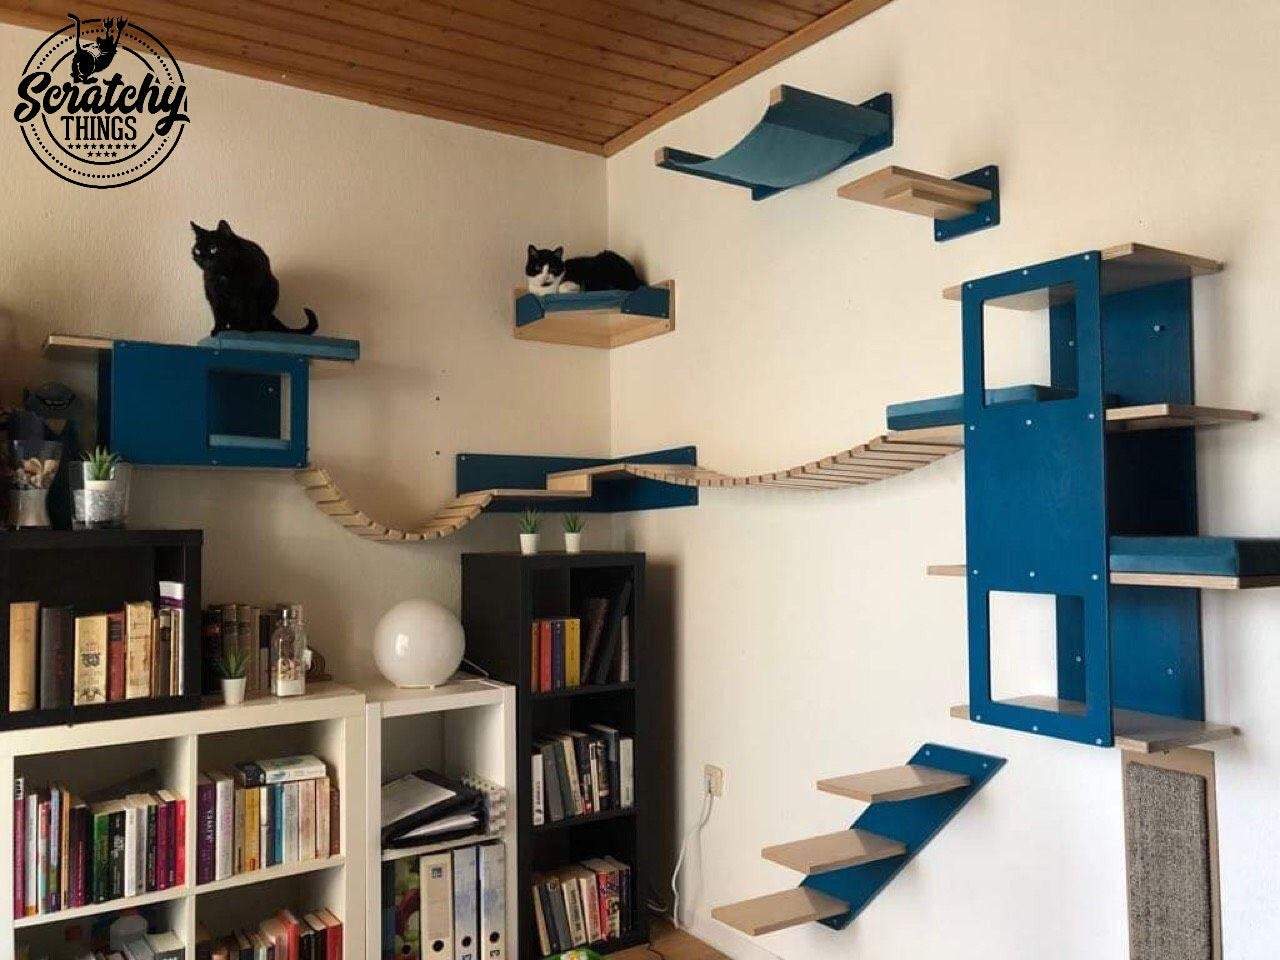 Cat Wall Shelf Bridge Bed Bundle - Big Corner Bundle - Scratchy Things Premium Pet Furniture